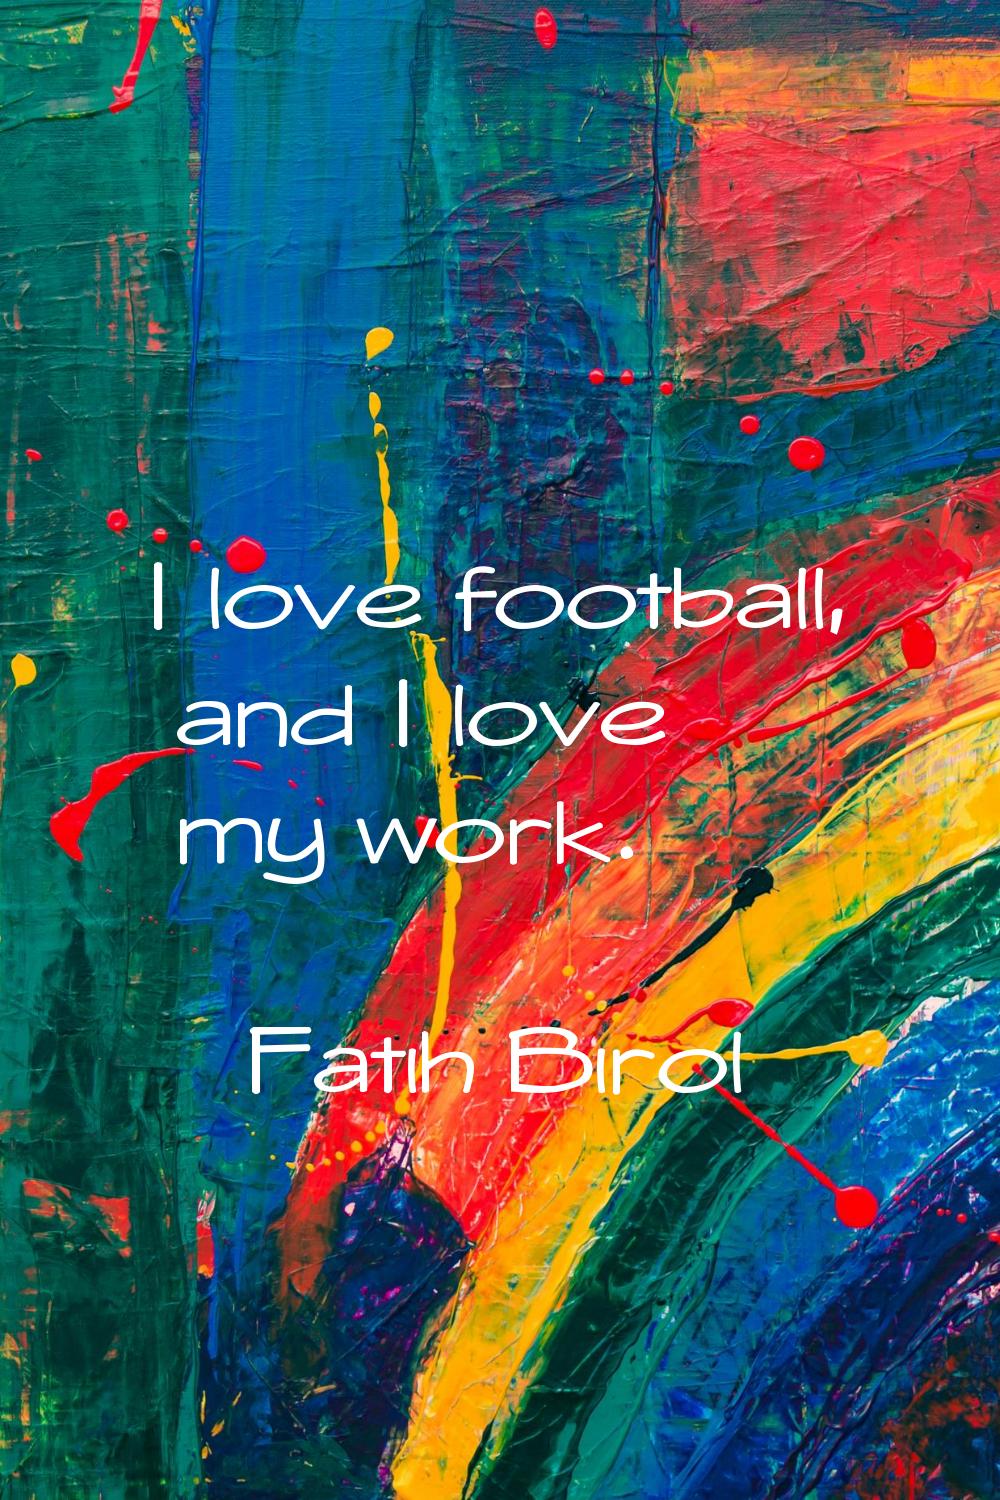 I love football, and I love my work.